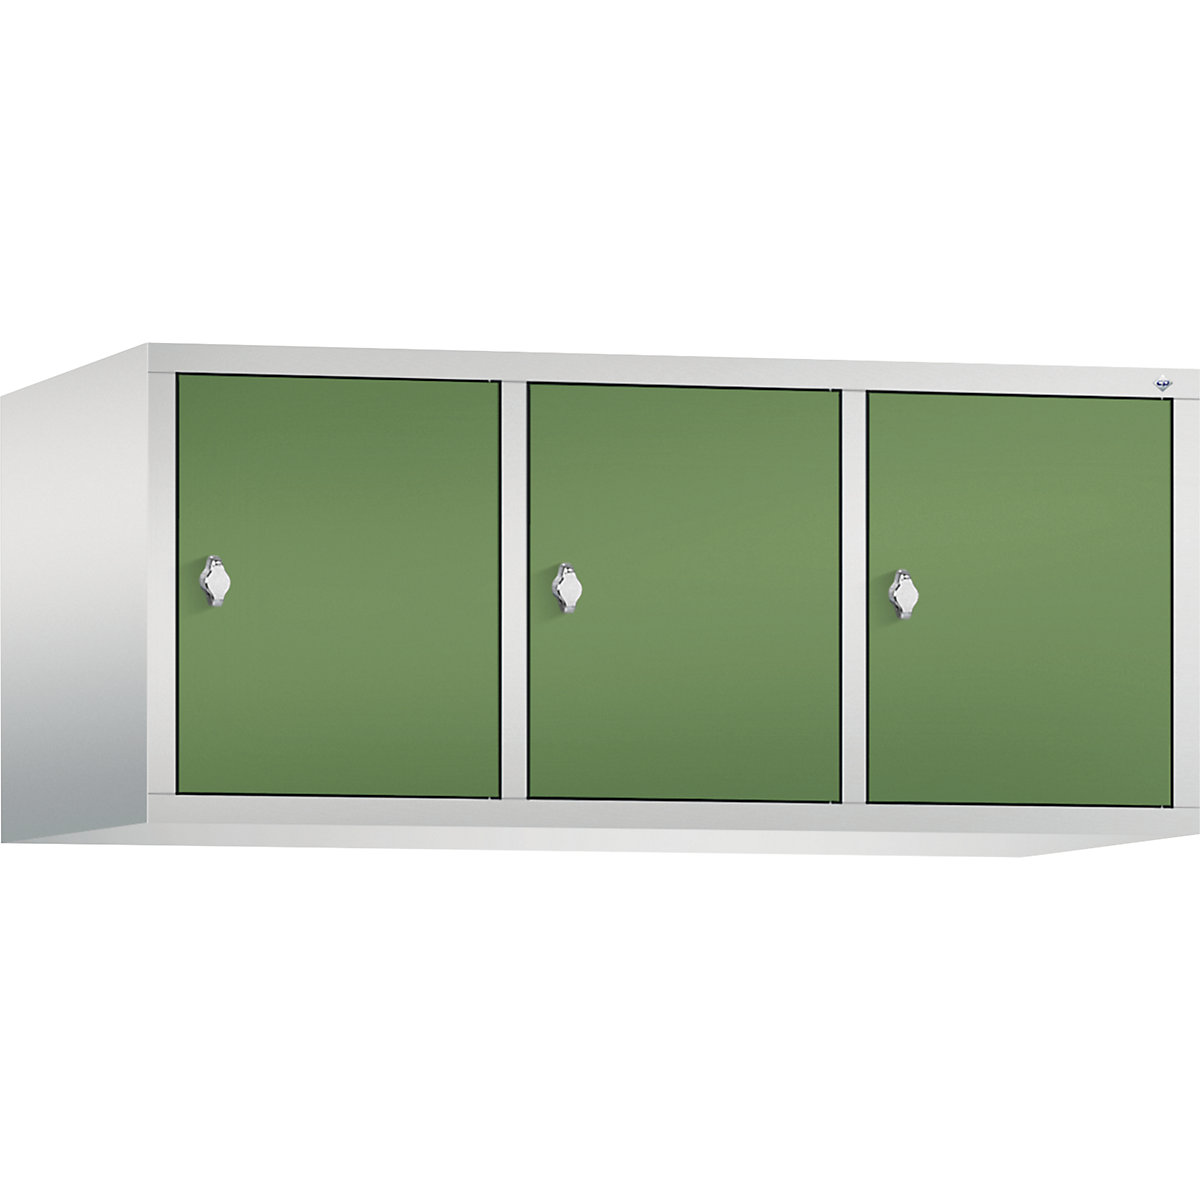 C+P – Altillo CLASSIC, 3 compartimentos, anchura de compartimento 400 mm, gris luminoso / verde reseda